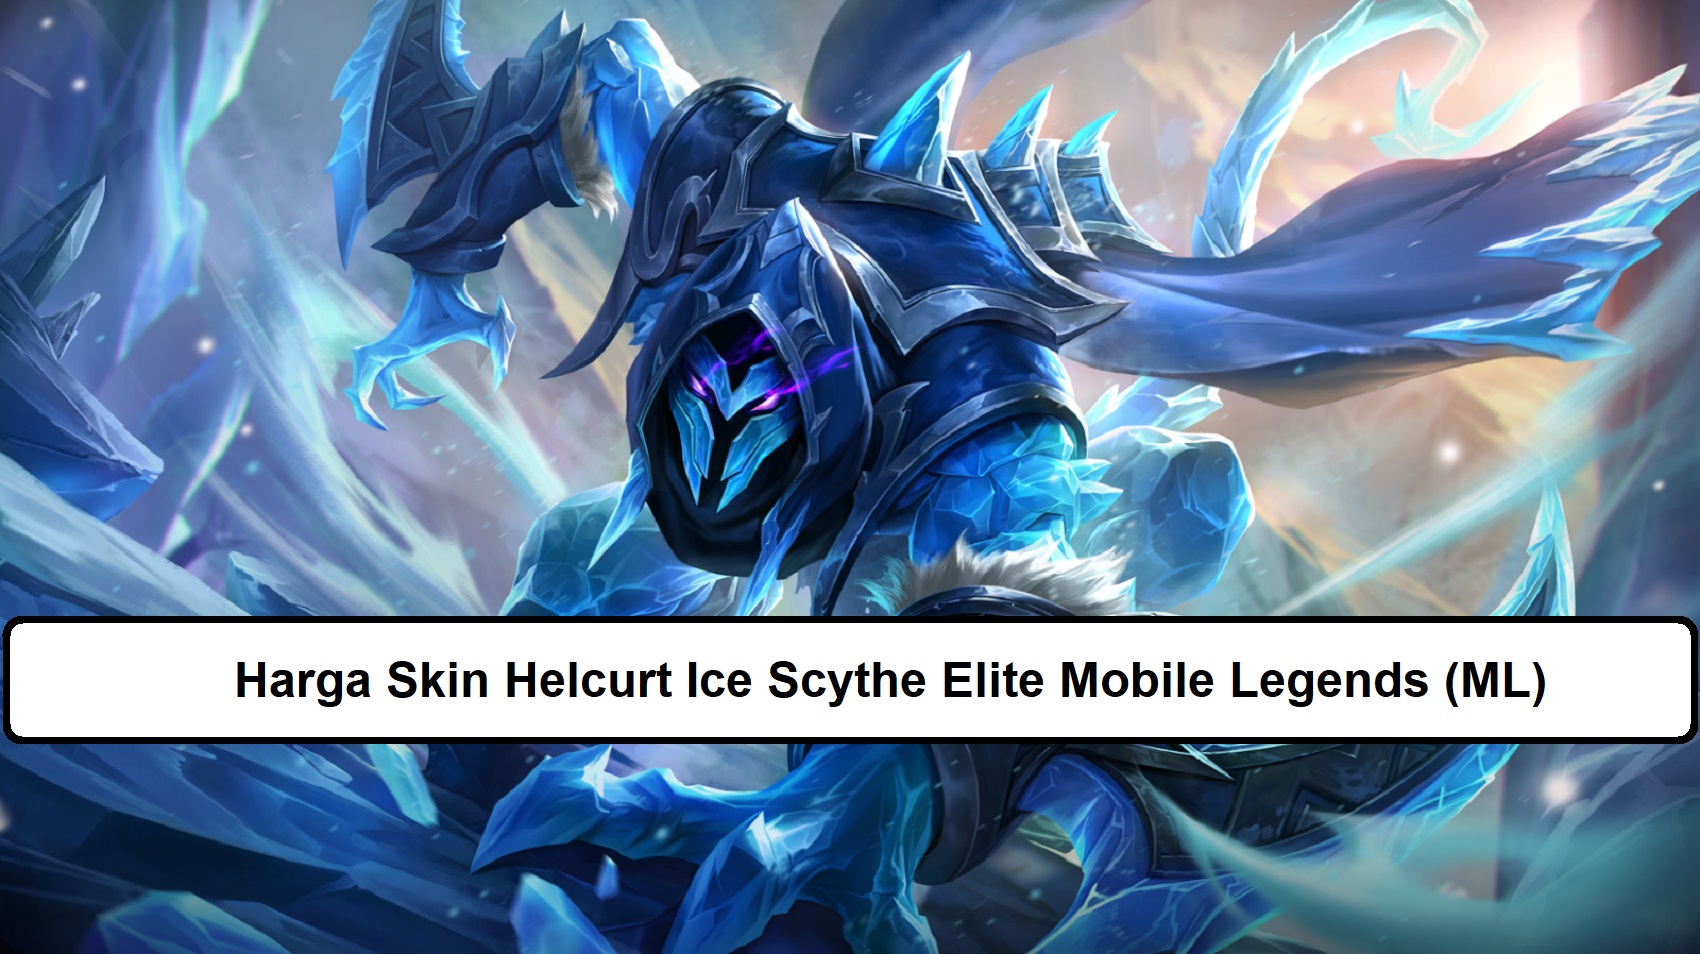 Frozen Scythe of Ice cs go skin download the new for mac